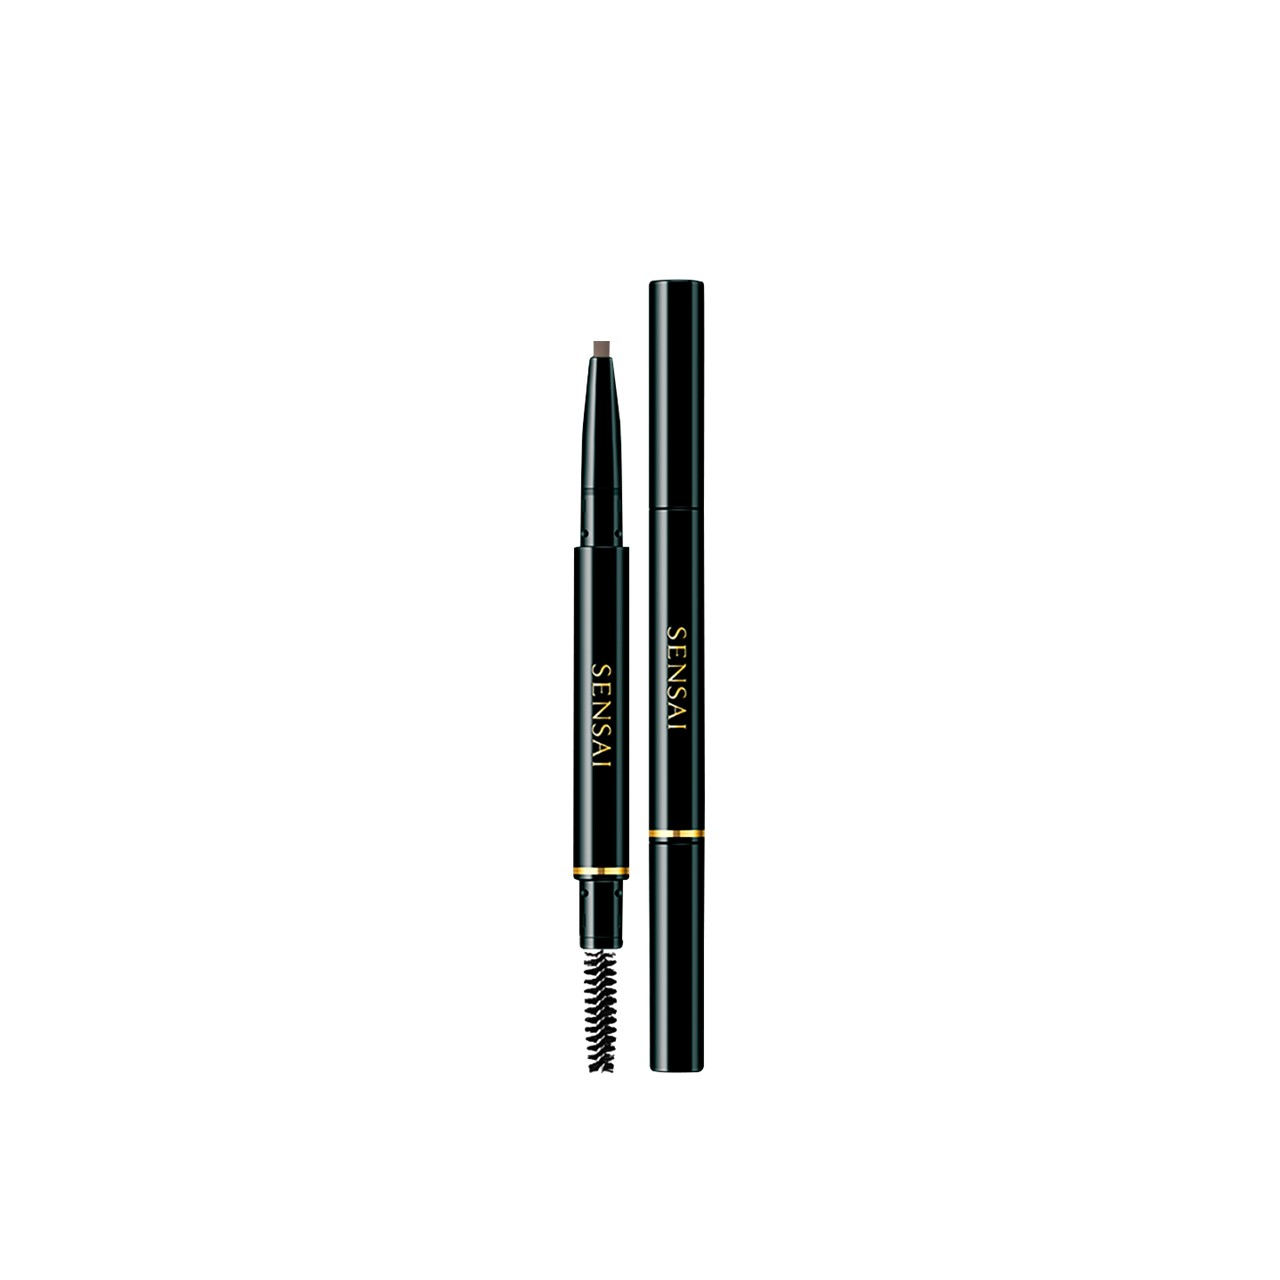 SENSAI Styling Eyebrow Pencil 02 Warm Brown 0.2g